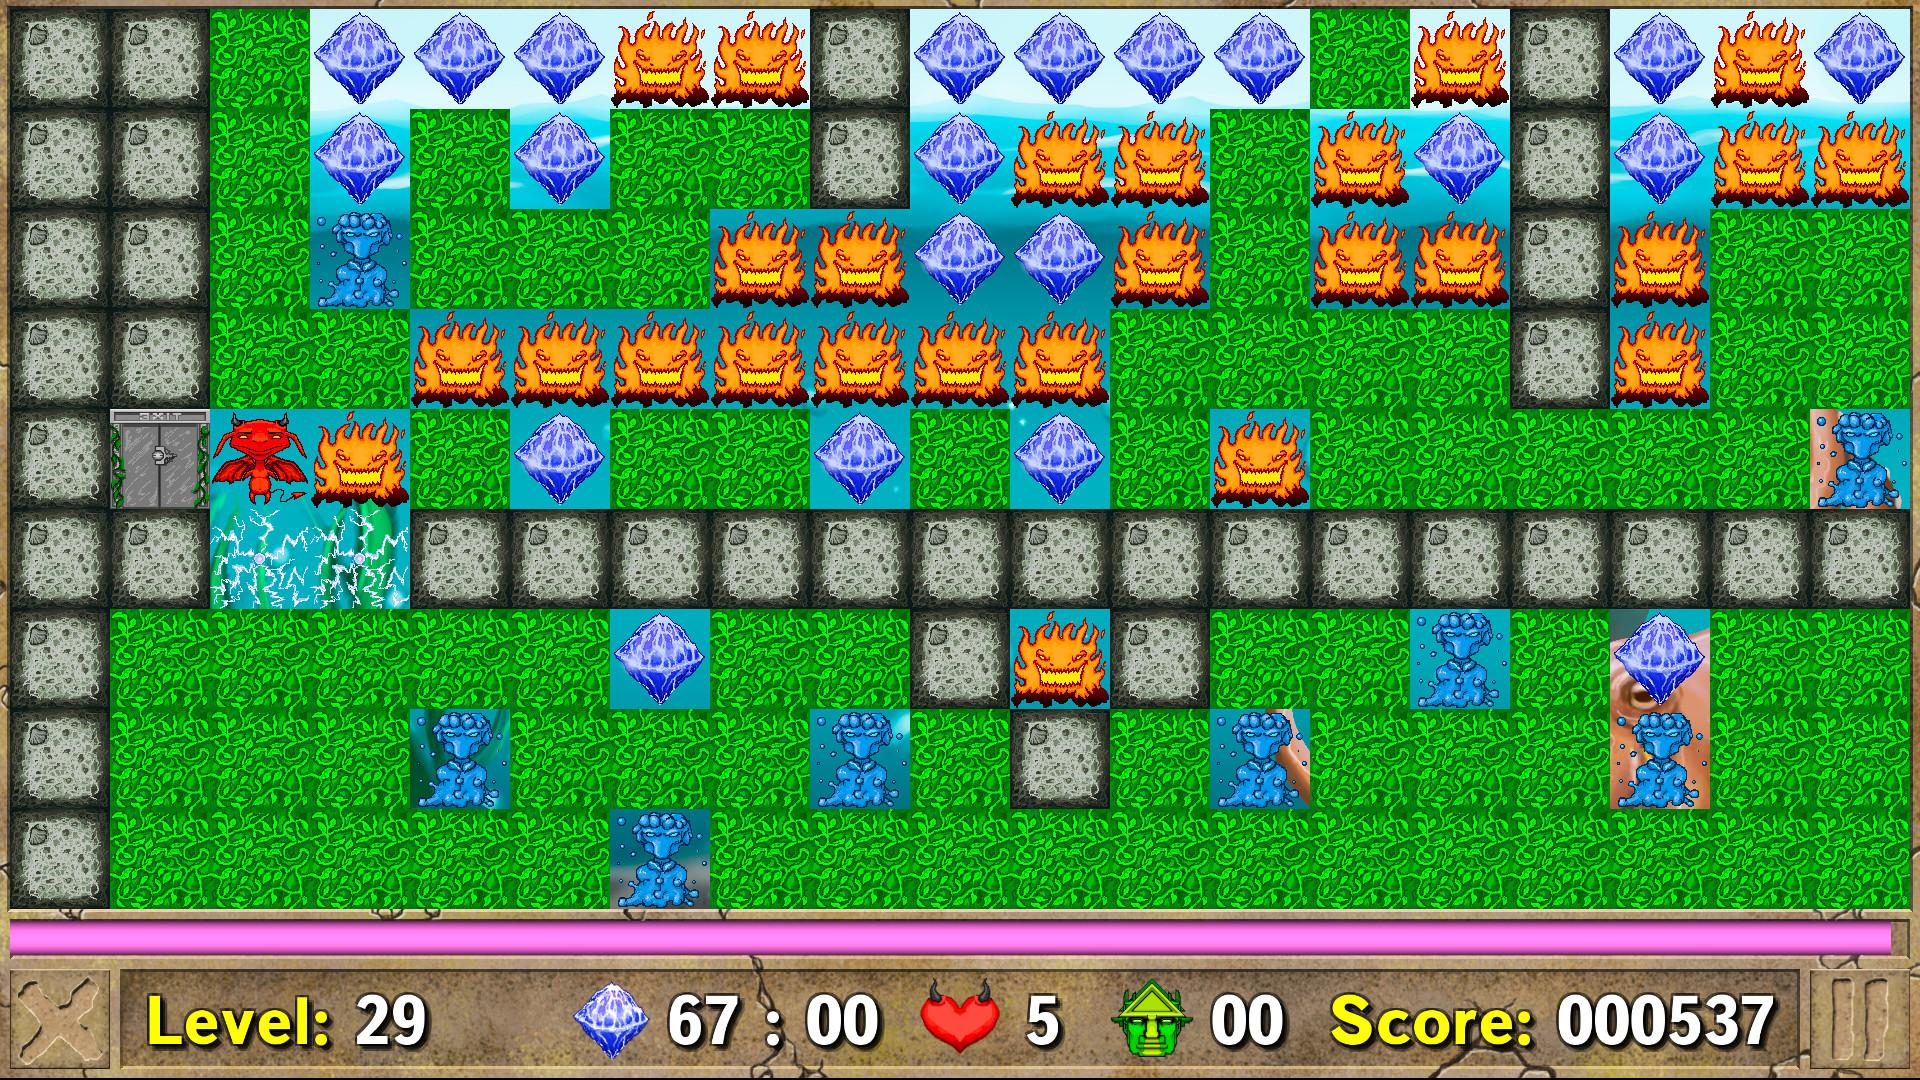 Screenshot №3 from game Elems